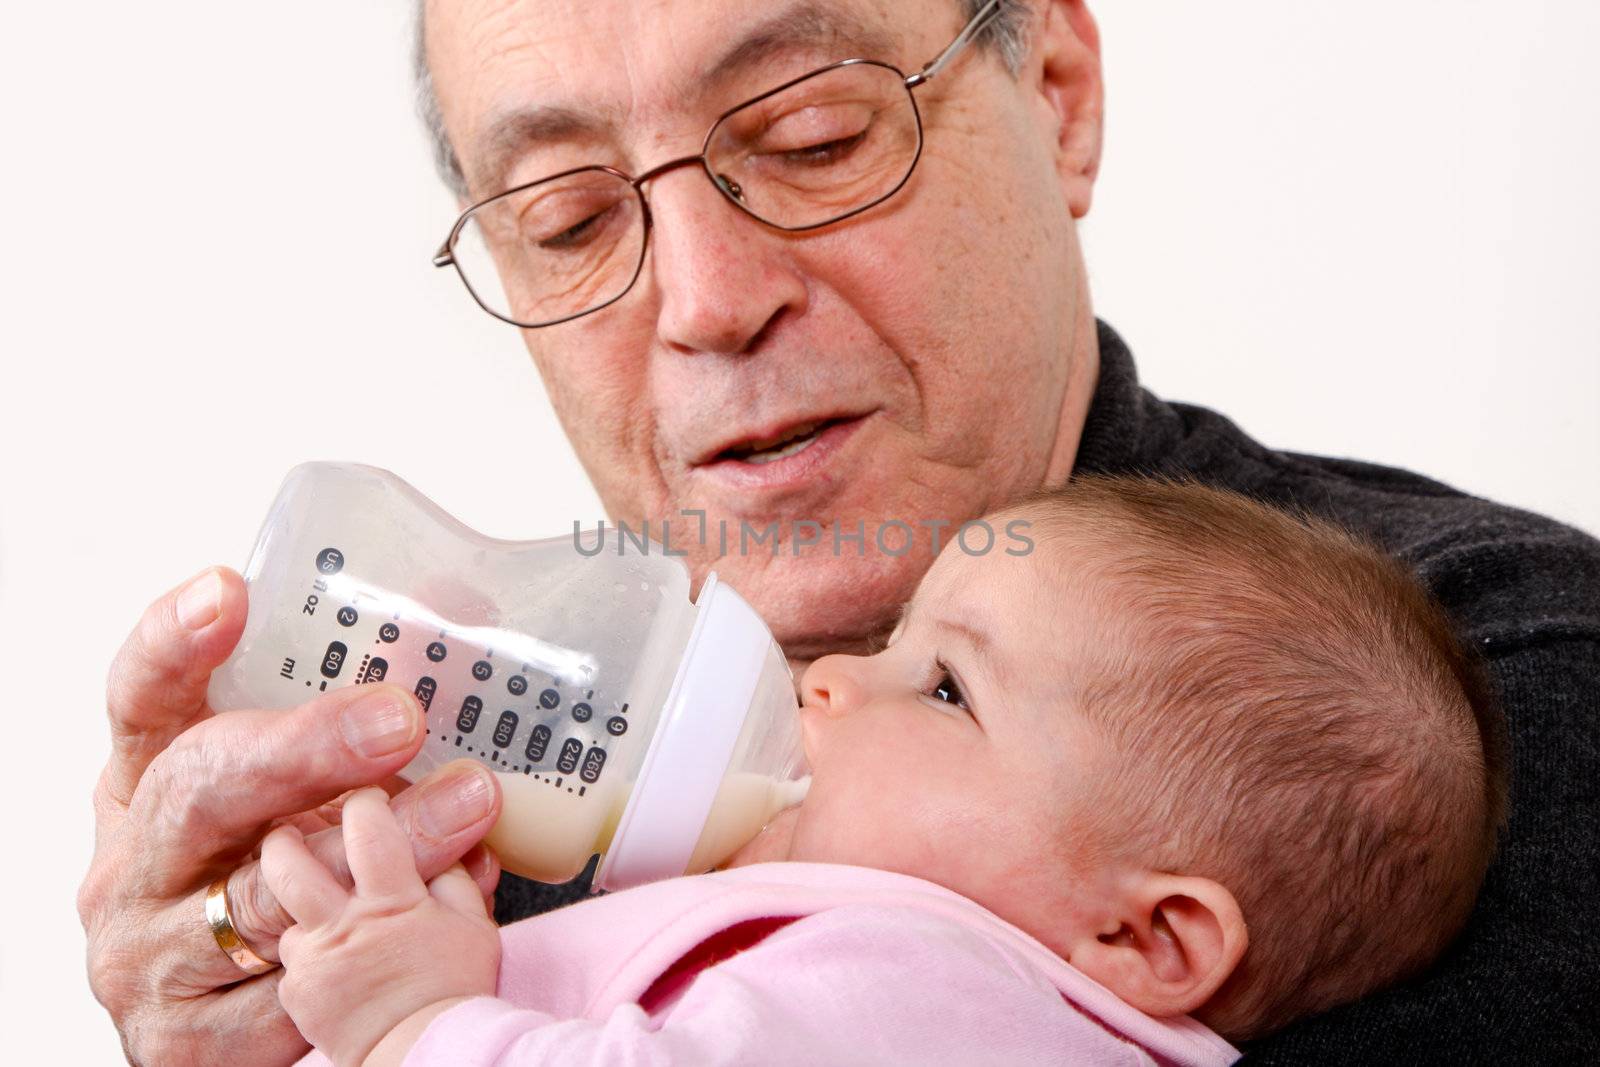 Grandpa bottle feeding baby girl by phakimata